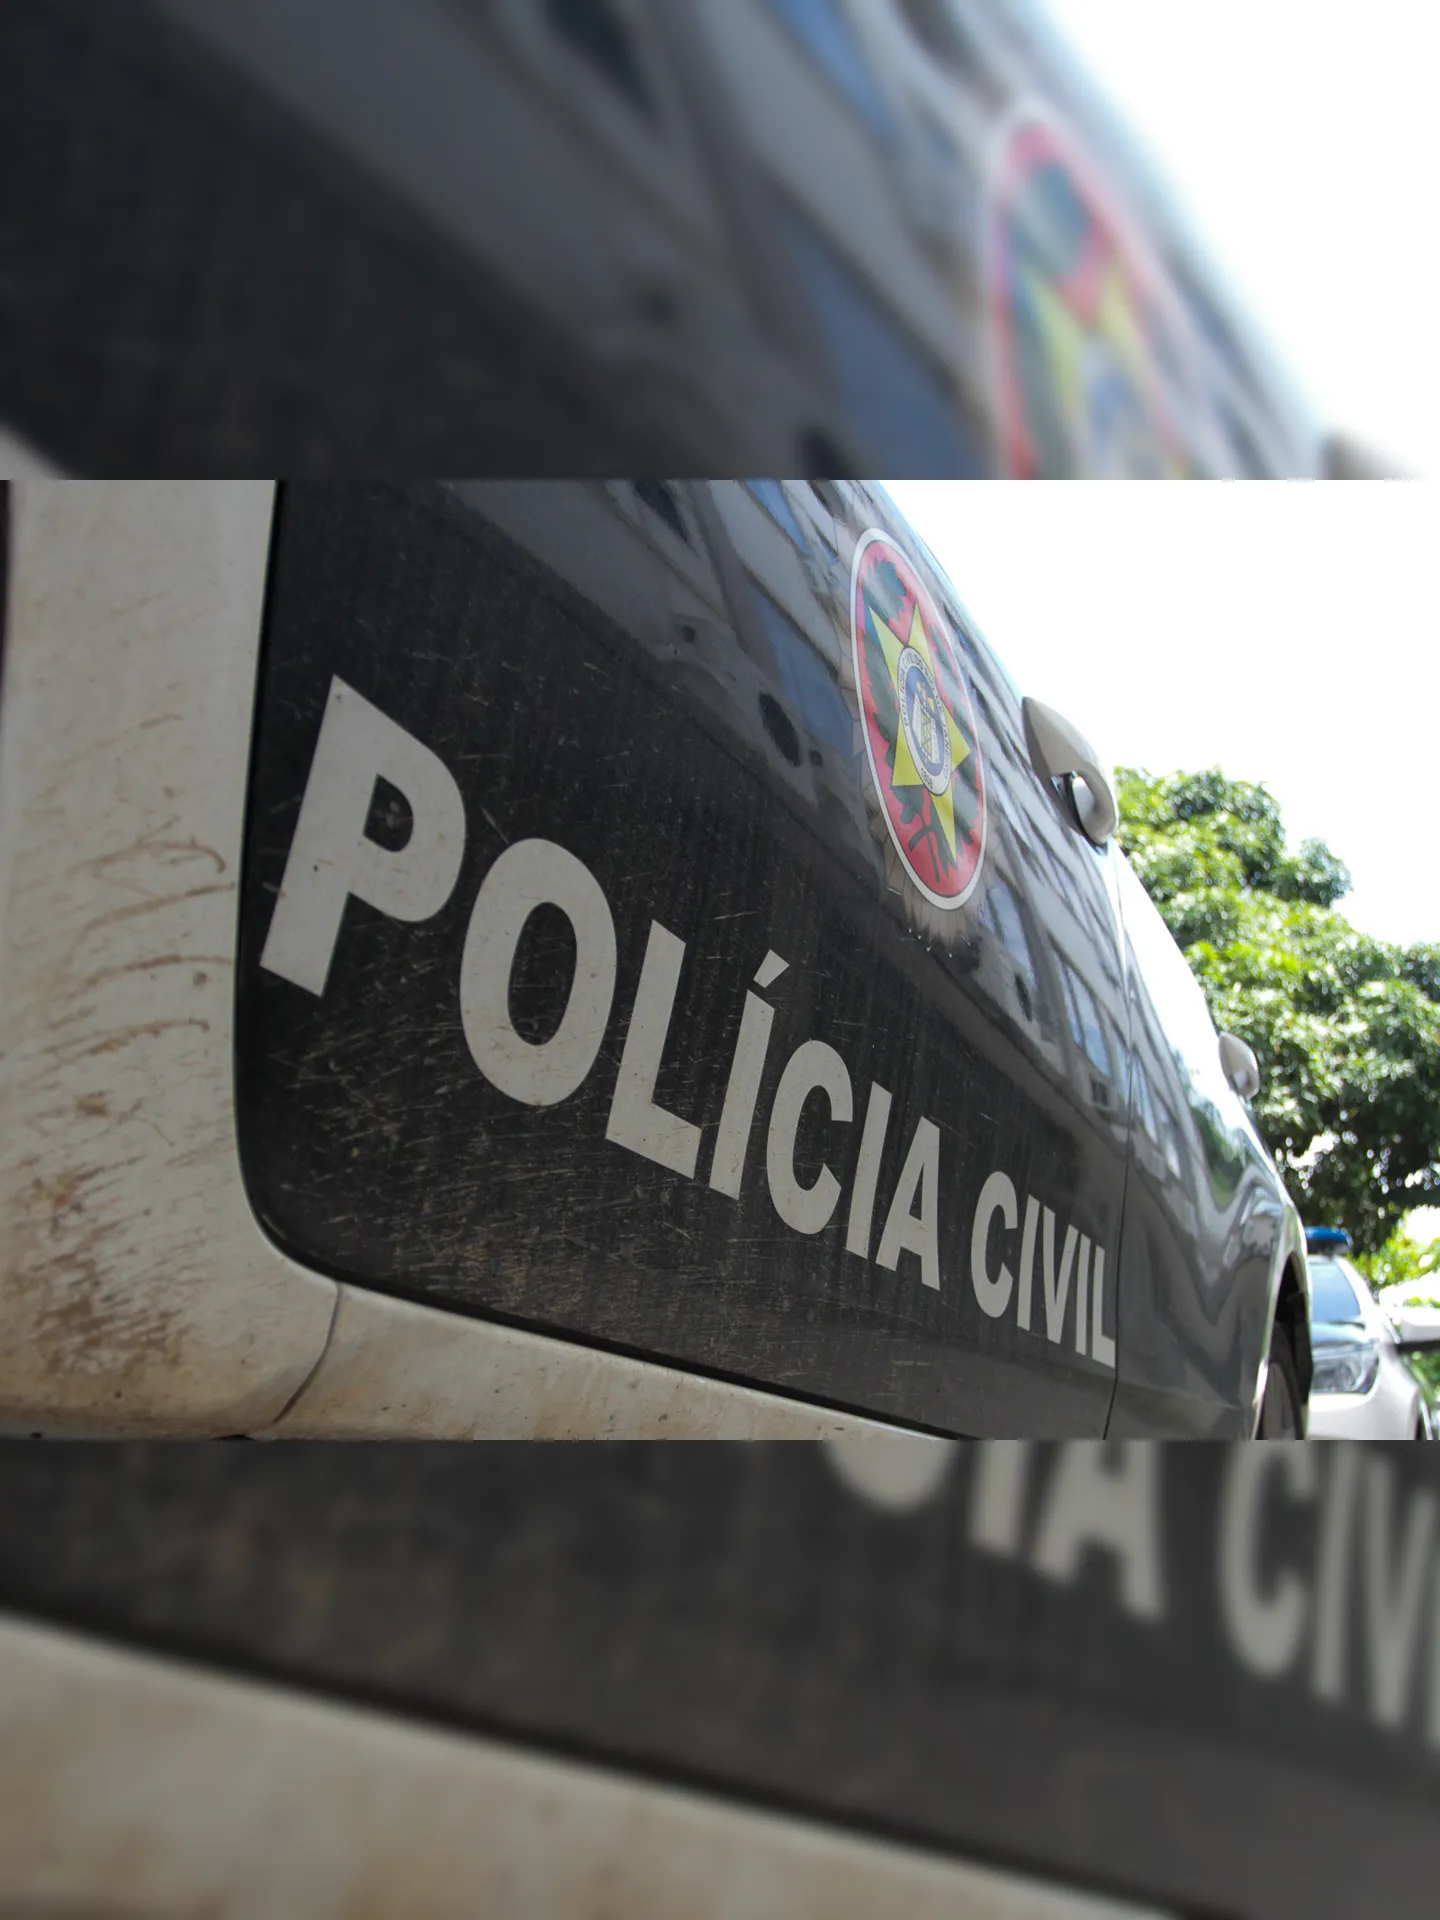 Agente da Guarda Municipal de Cabo Frio acusado de agredir esposa